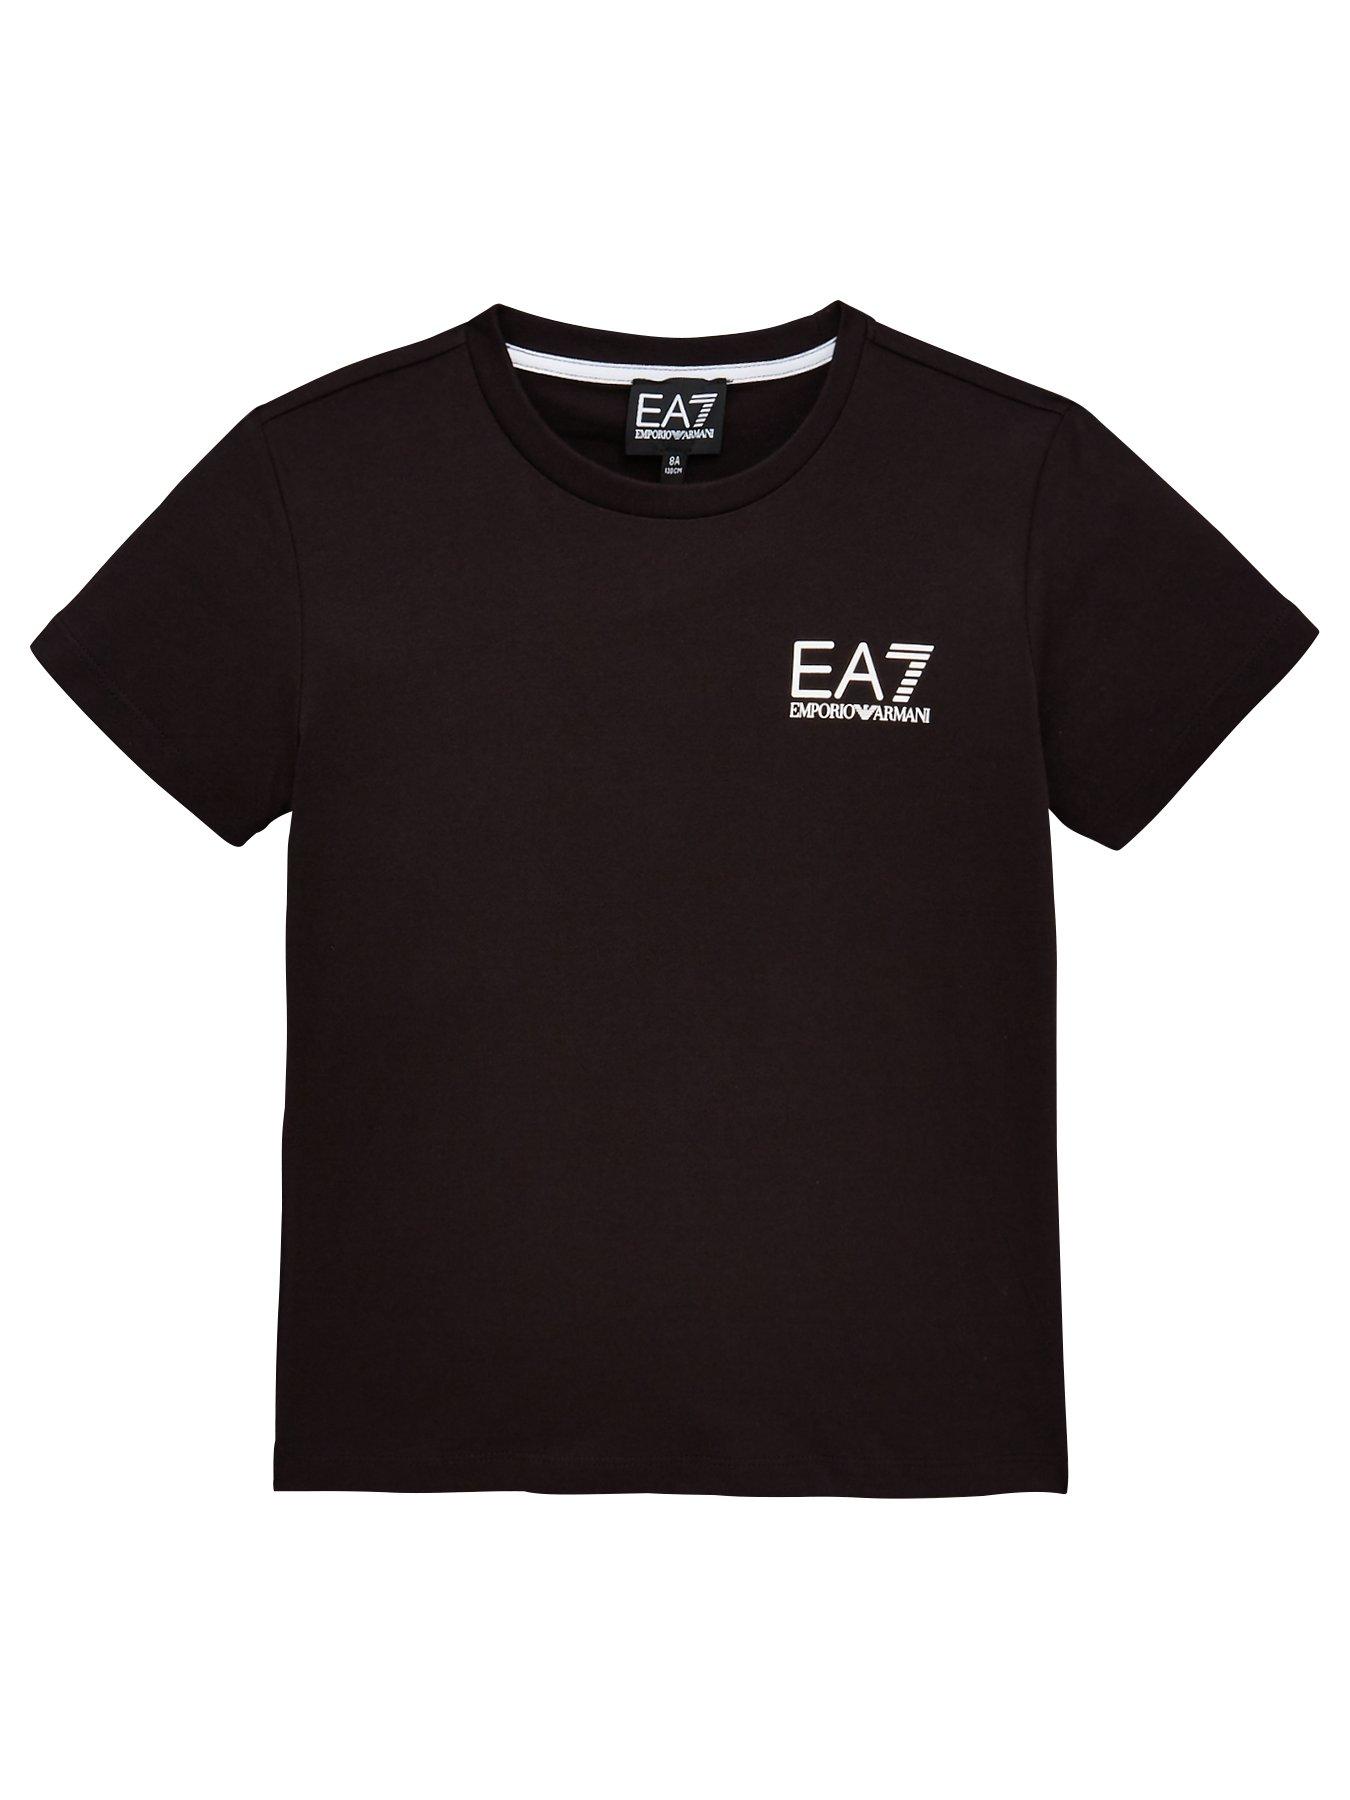 ea7 t shirt sports direct - 62% OFF 